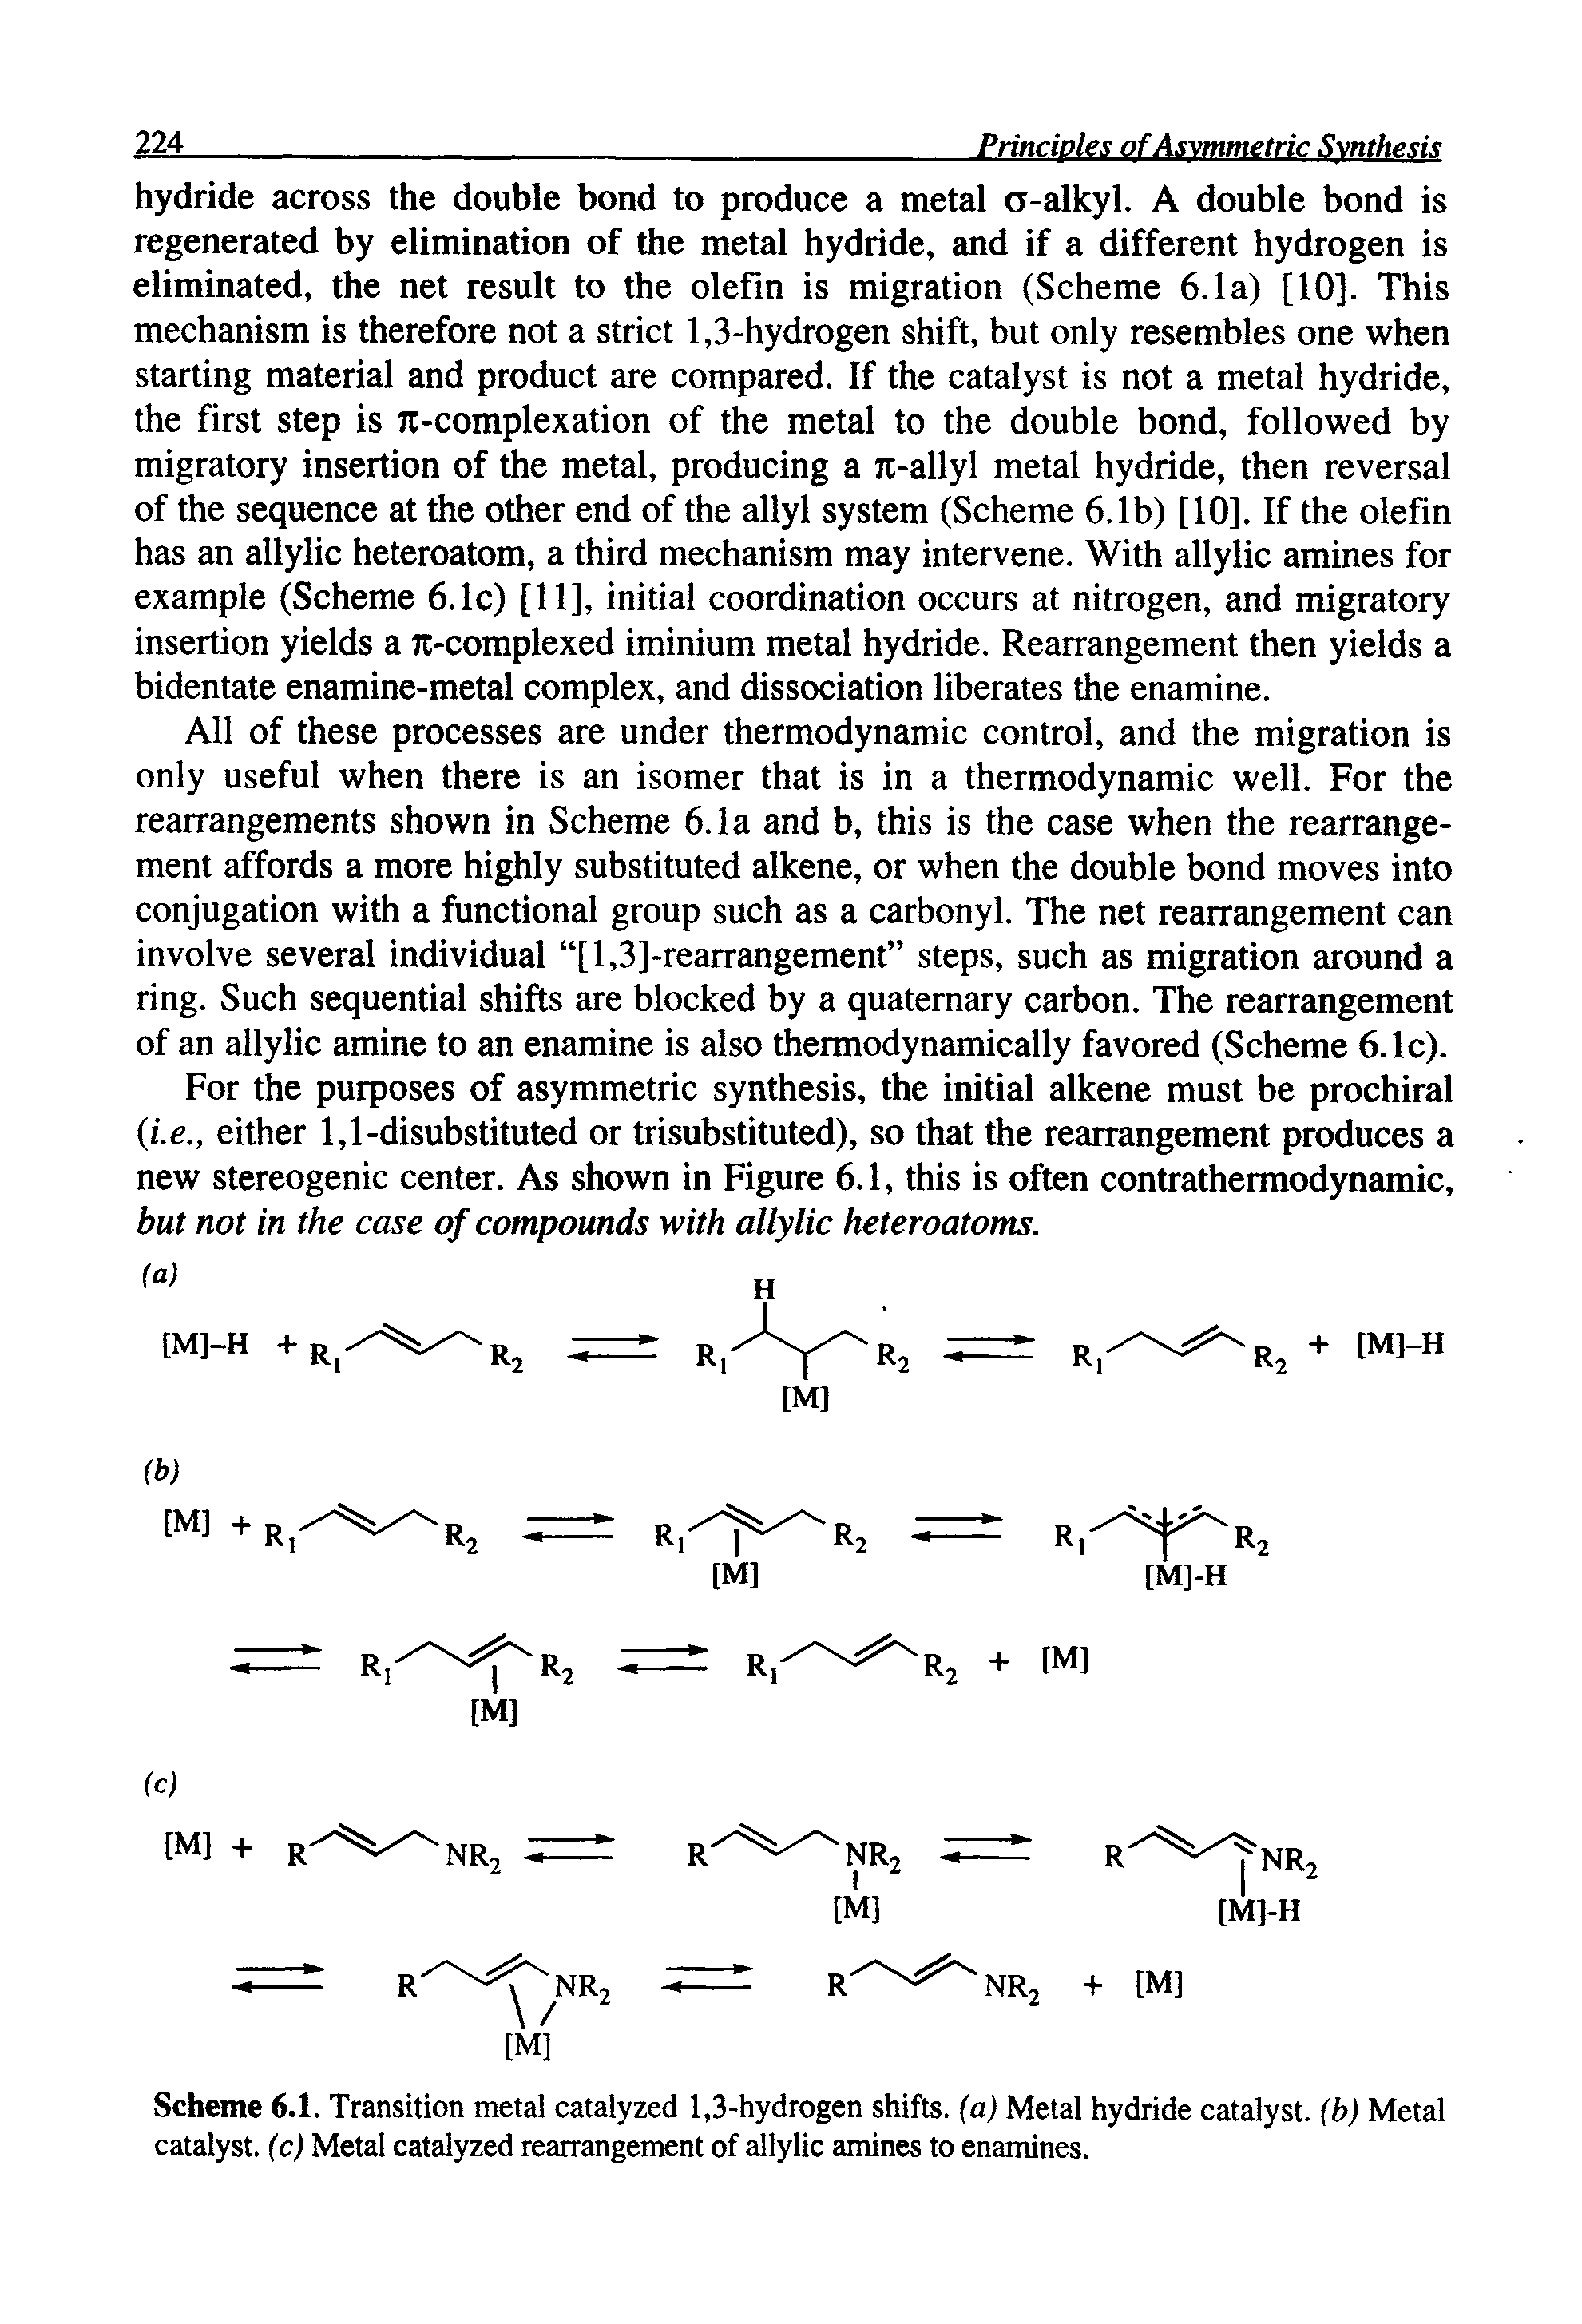 Scheme 6.1. Transition metal catalyzed 1,3-hydrogen shifts, (a) Metal hydride catalyst, (b) Metal catalyst, (c) Metal catalyzed rearrangement of allylic amines to enamines.